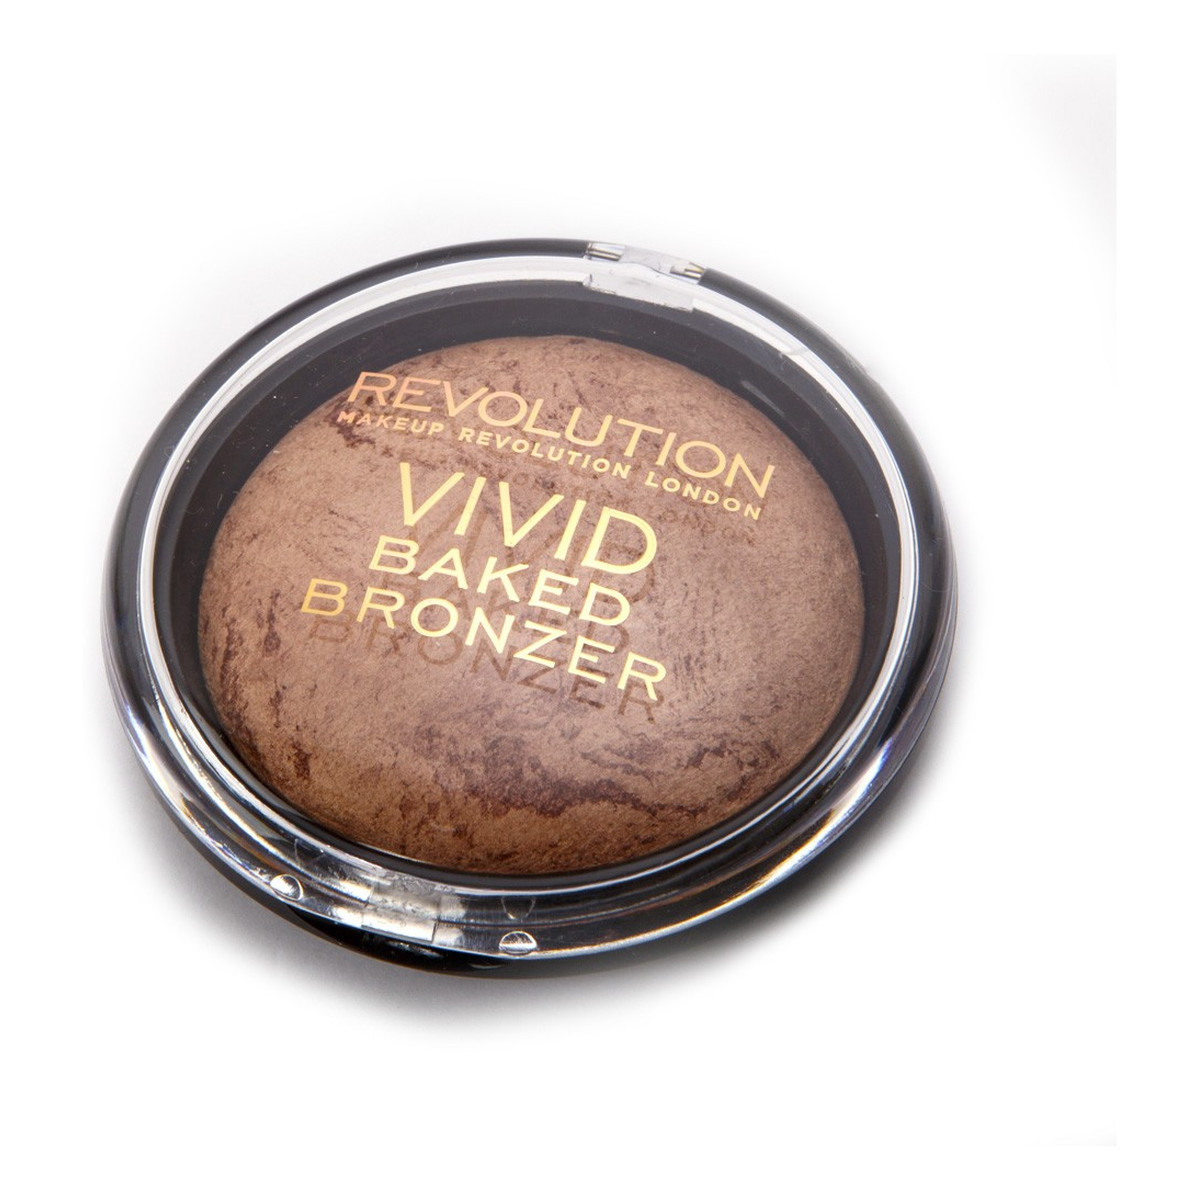 Makeup Revolution Vivid Baked Bronze Wypiekany Puder Brązujący 13g